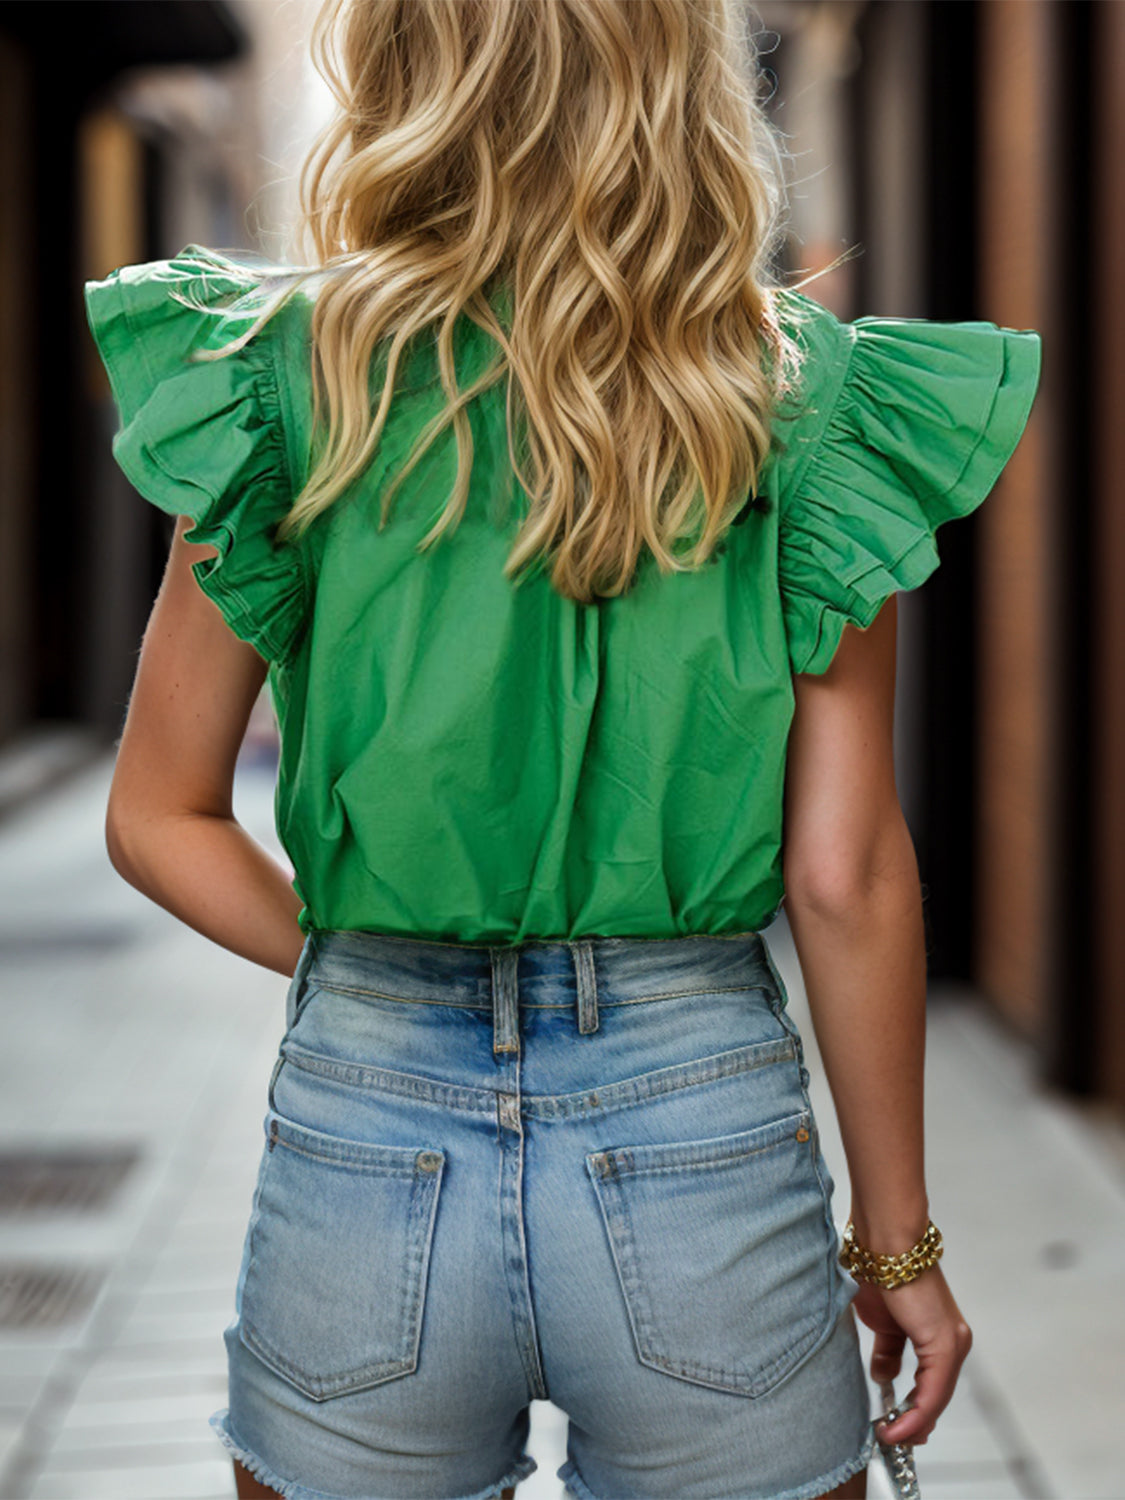 Short Sleeve Top Green Women's Fashion Casual Ruffled Notched Cap Sleeve Blouse